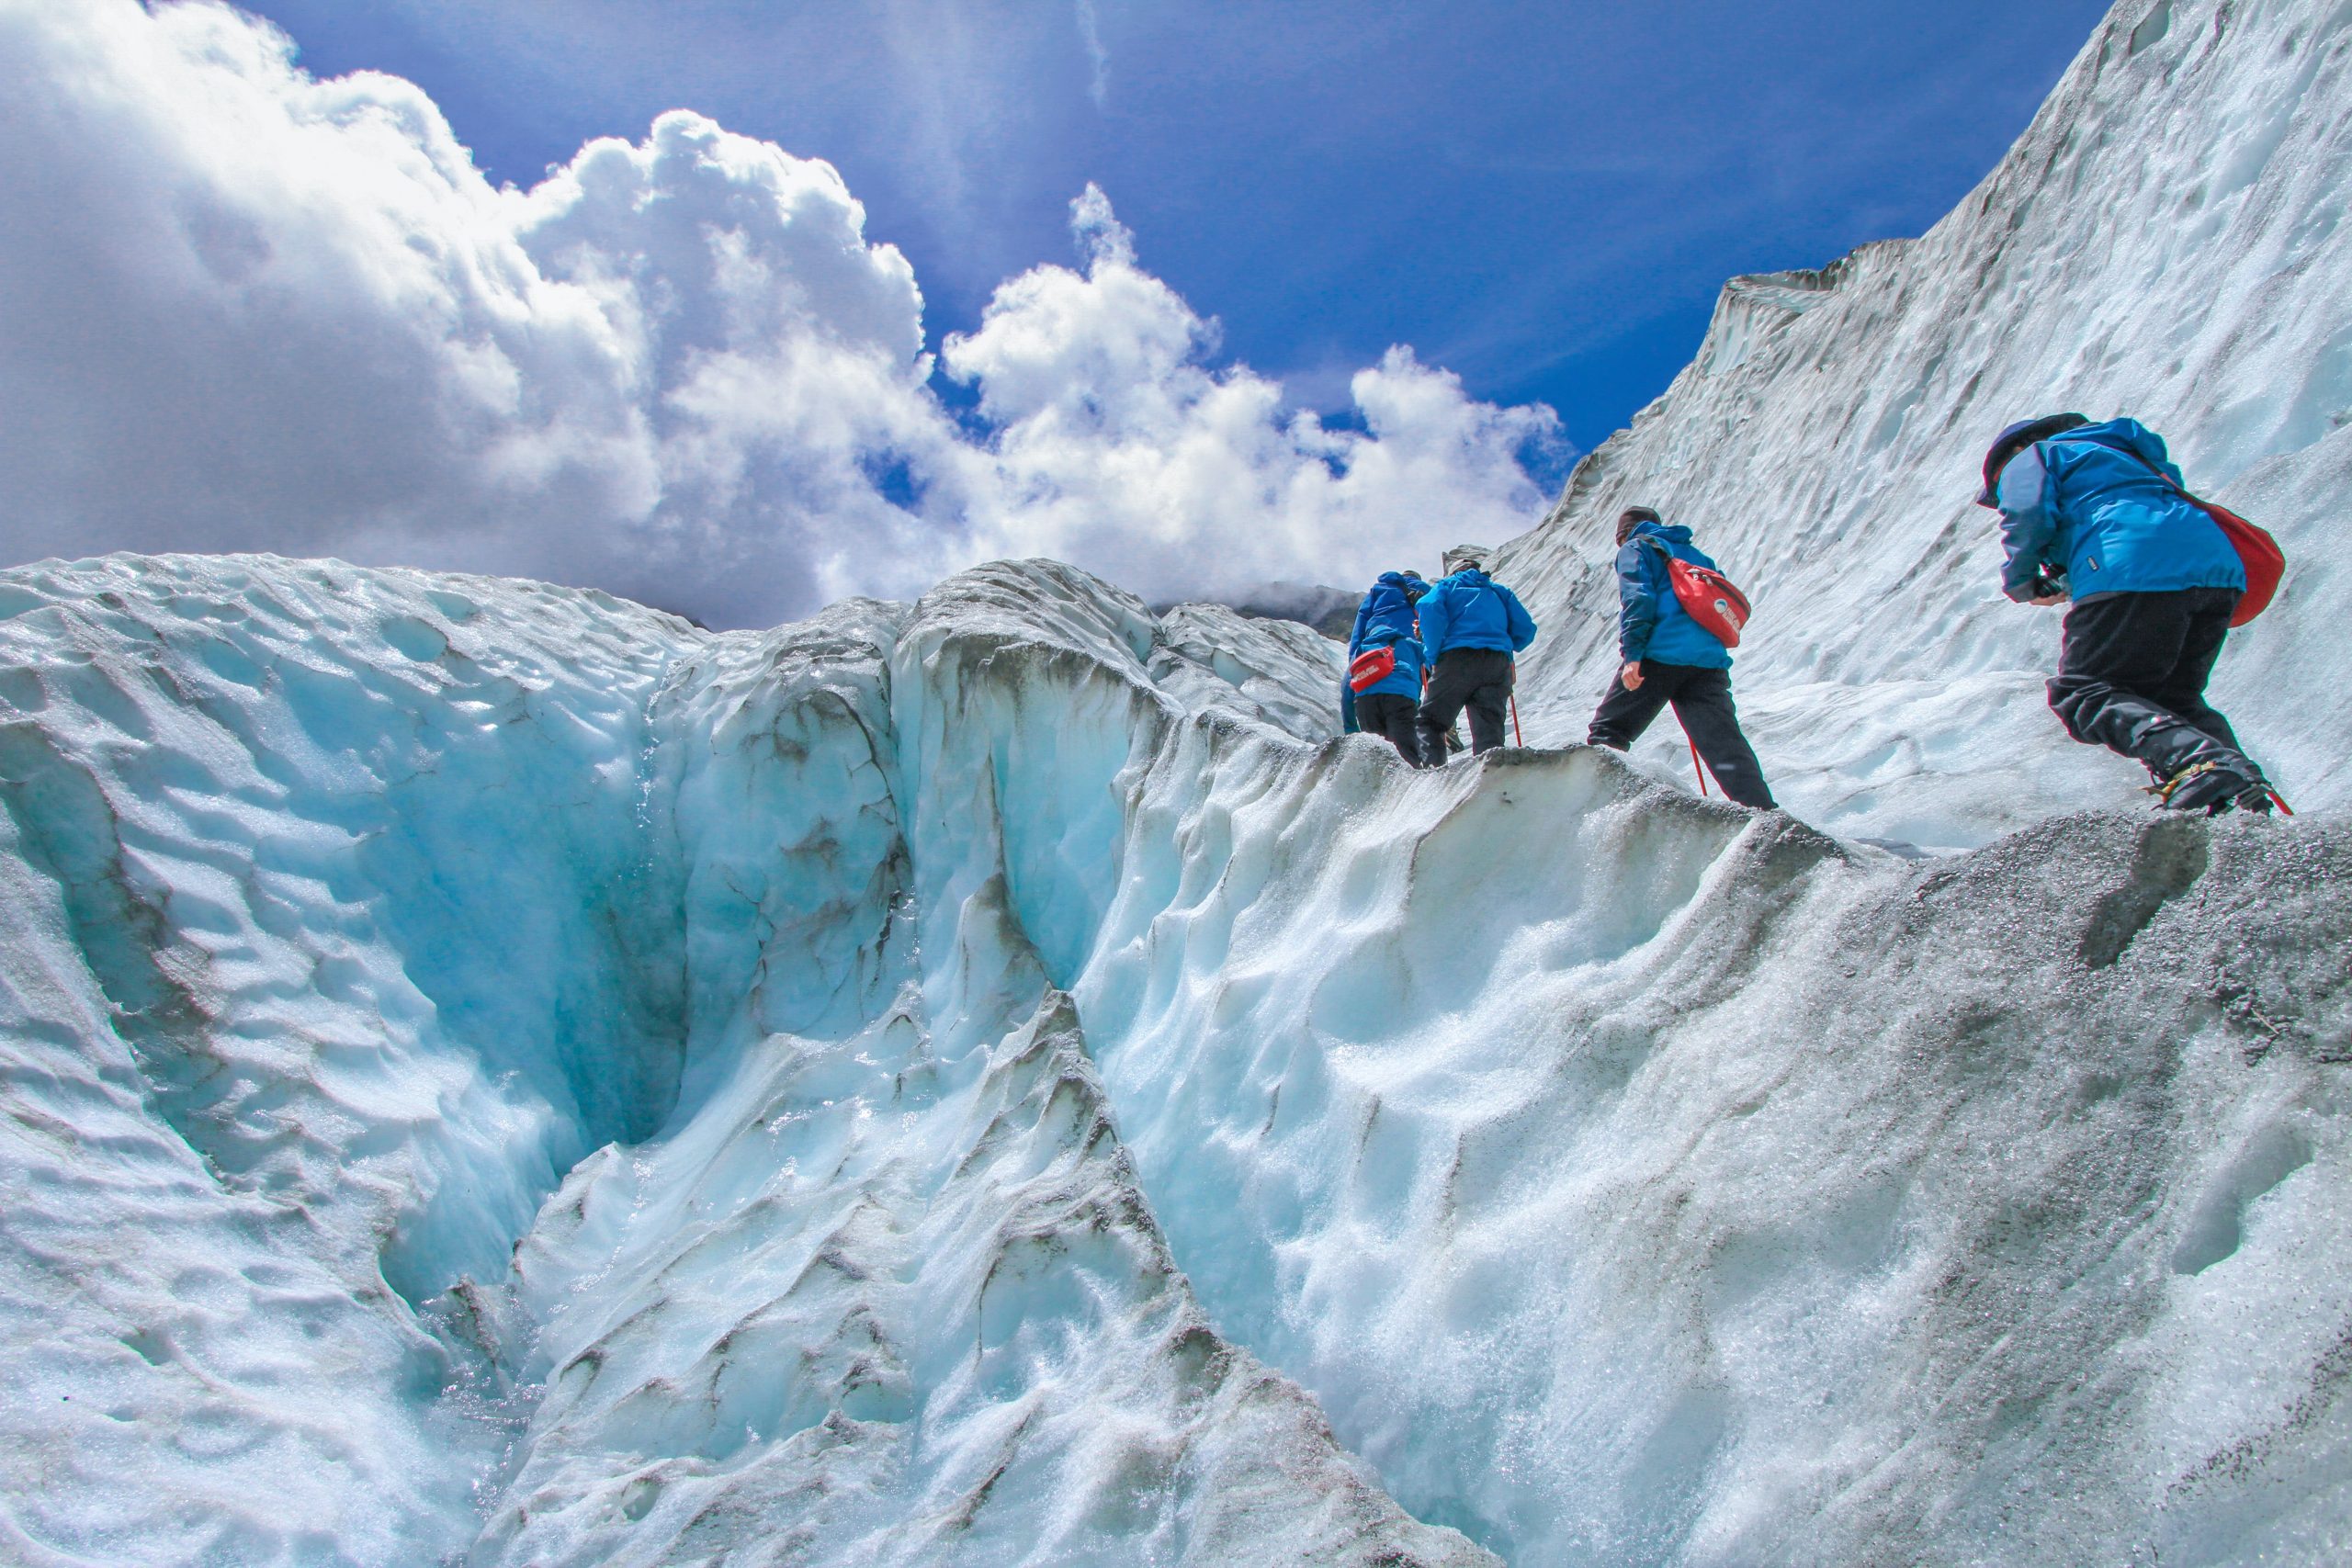 Franz Josef Glacier scaled